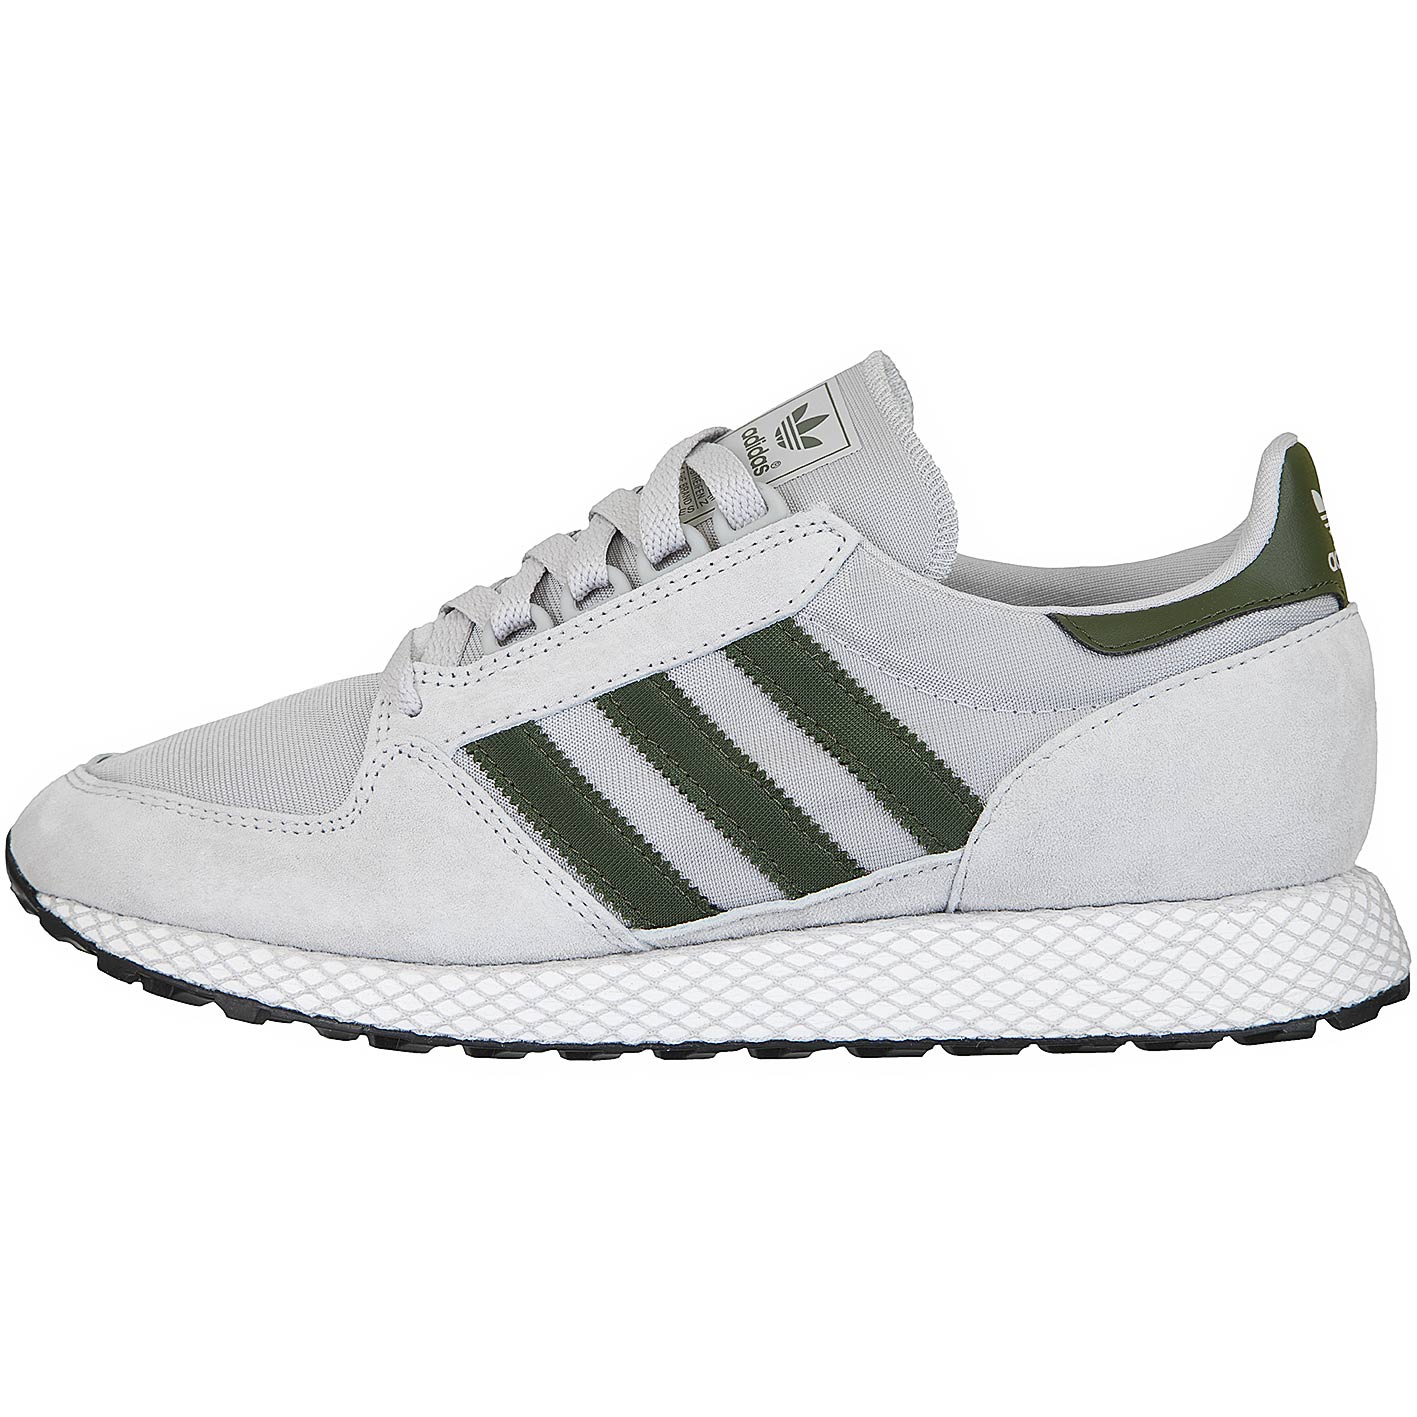 ☆ Adidas Originals Sneaker Forest Grove grau/oliv - hier bestellen!